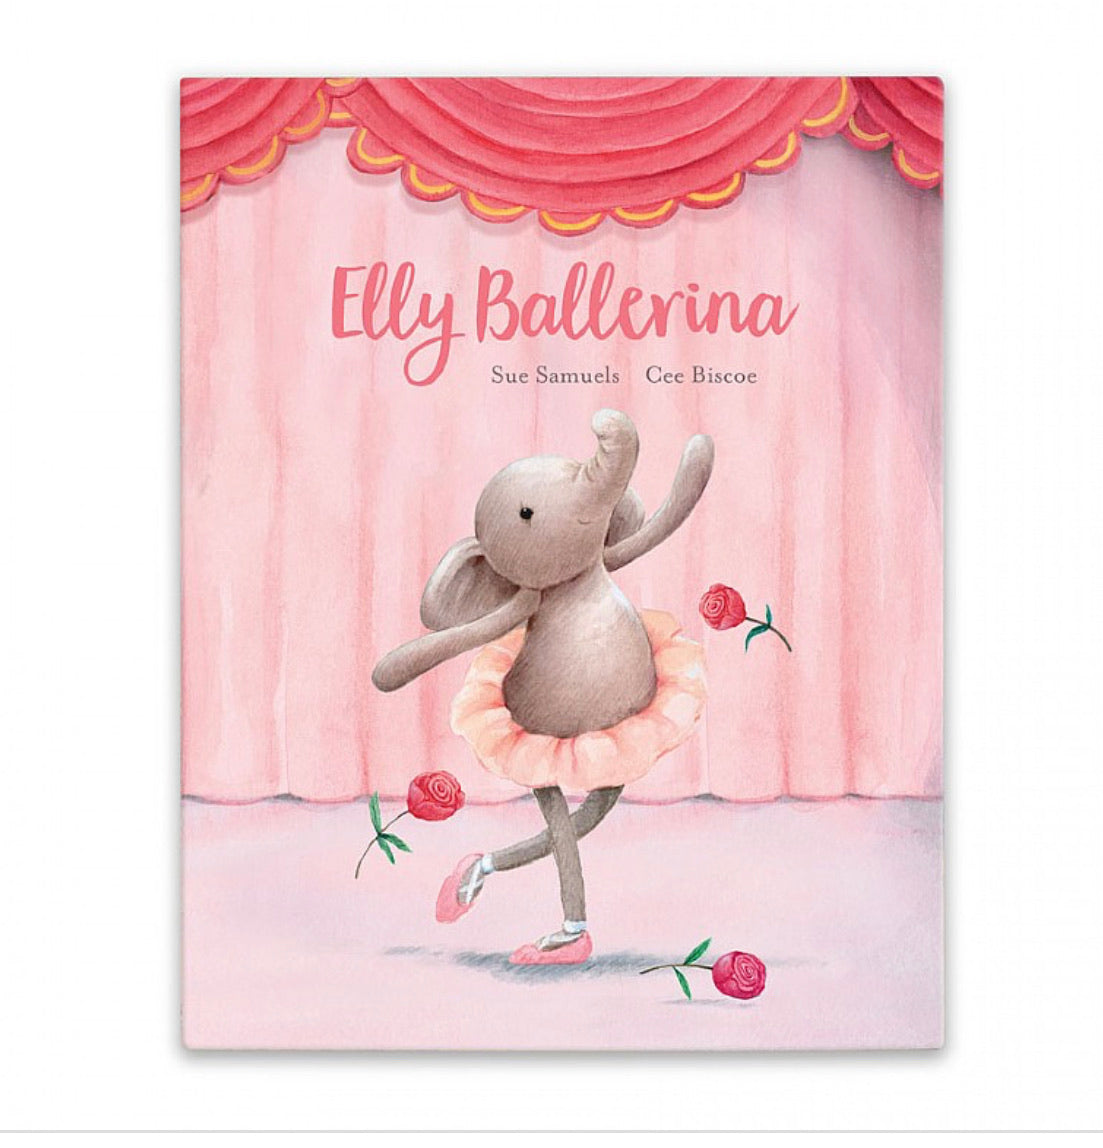 Jellycat “Elly Ballerina” Book